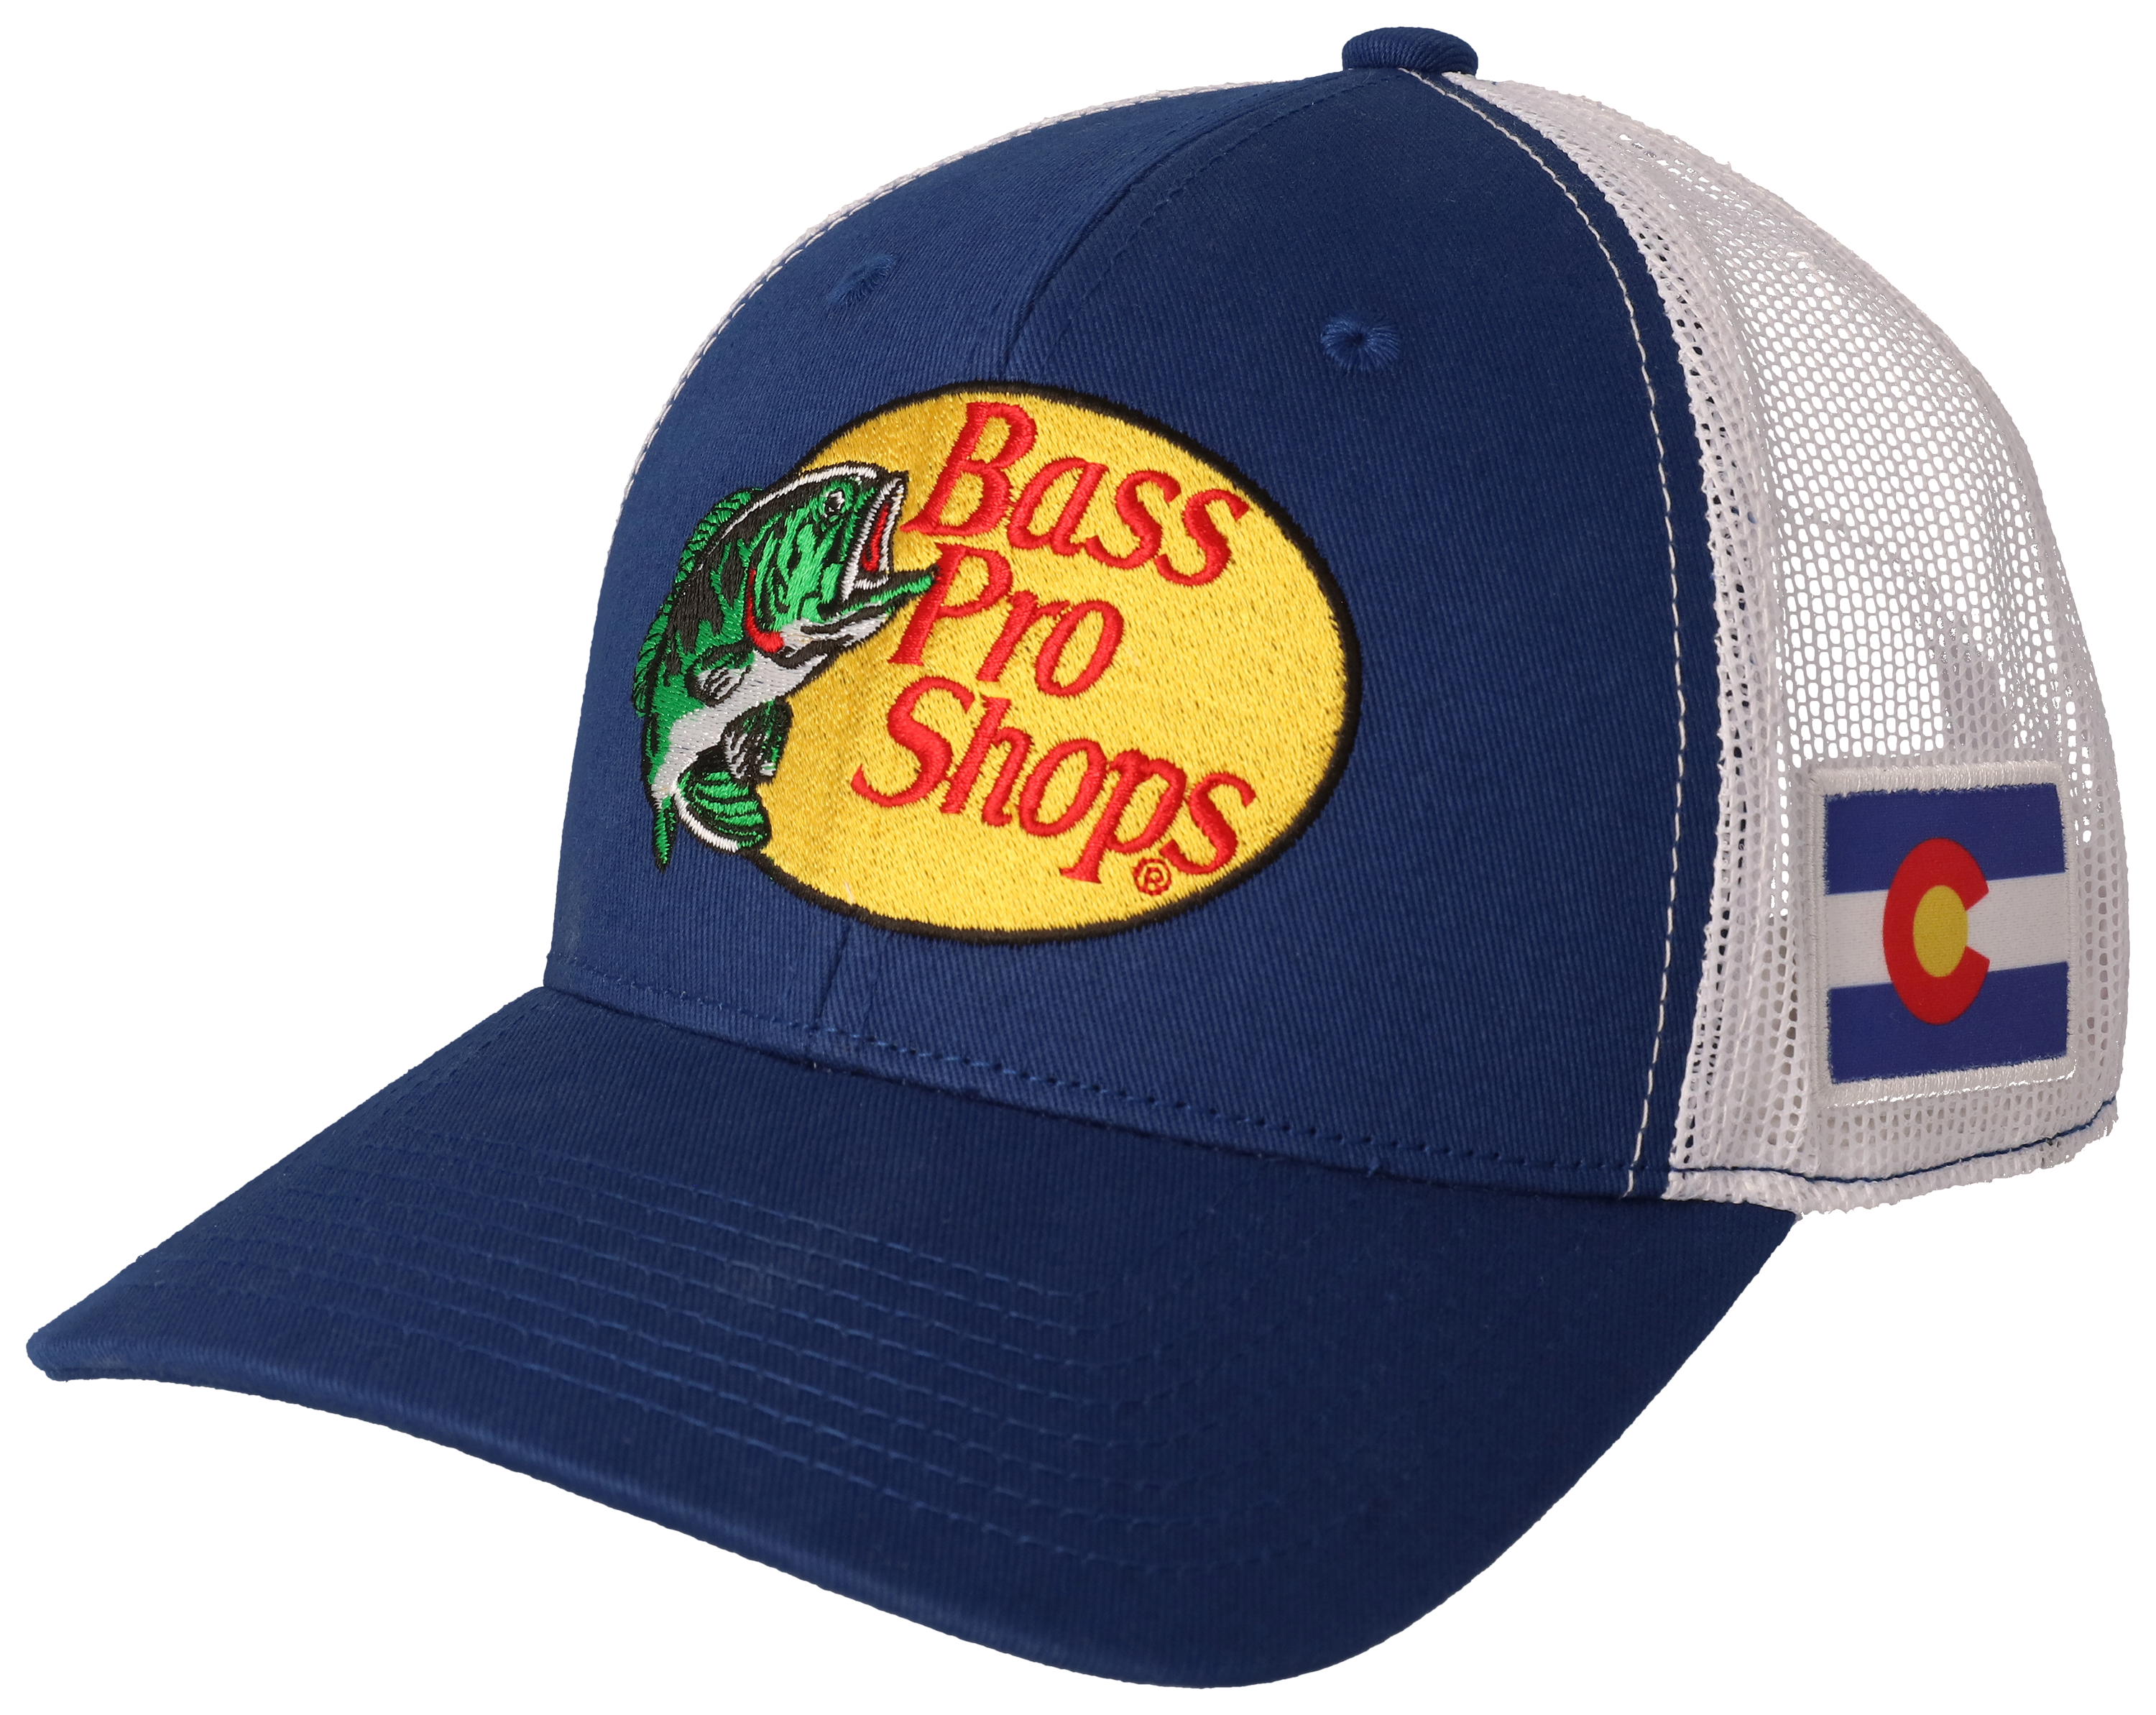 Bass Pro Shops Woodcut Logo and Colorado Flag Snapback Cap